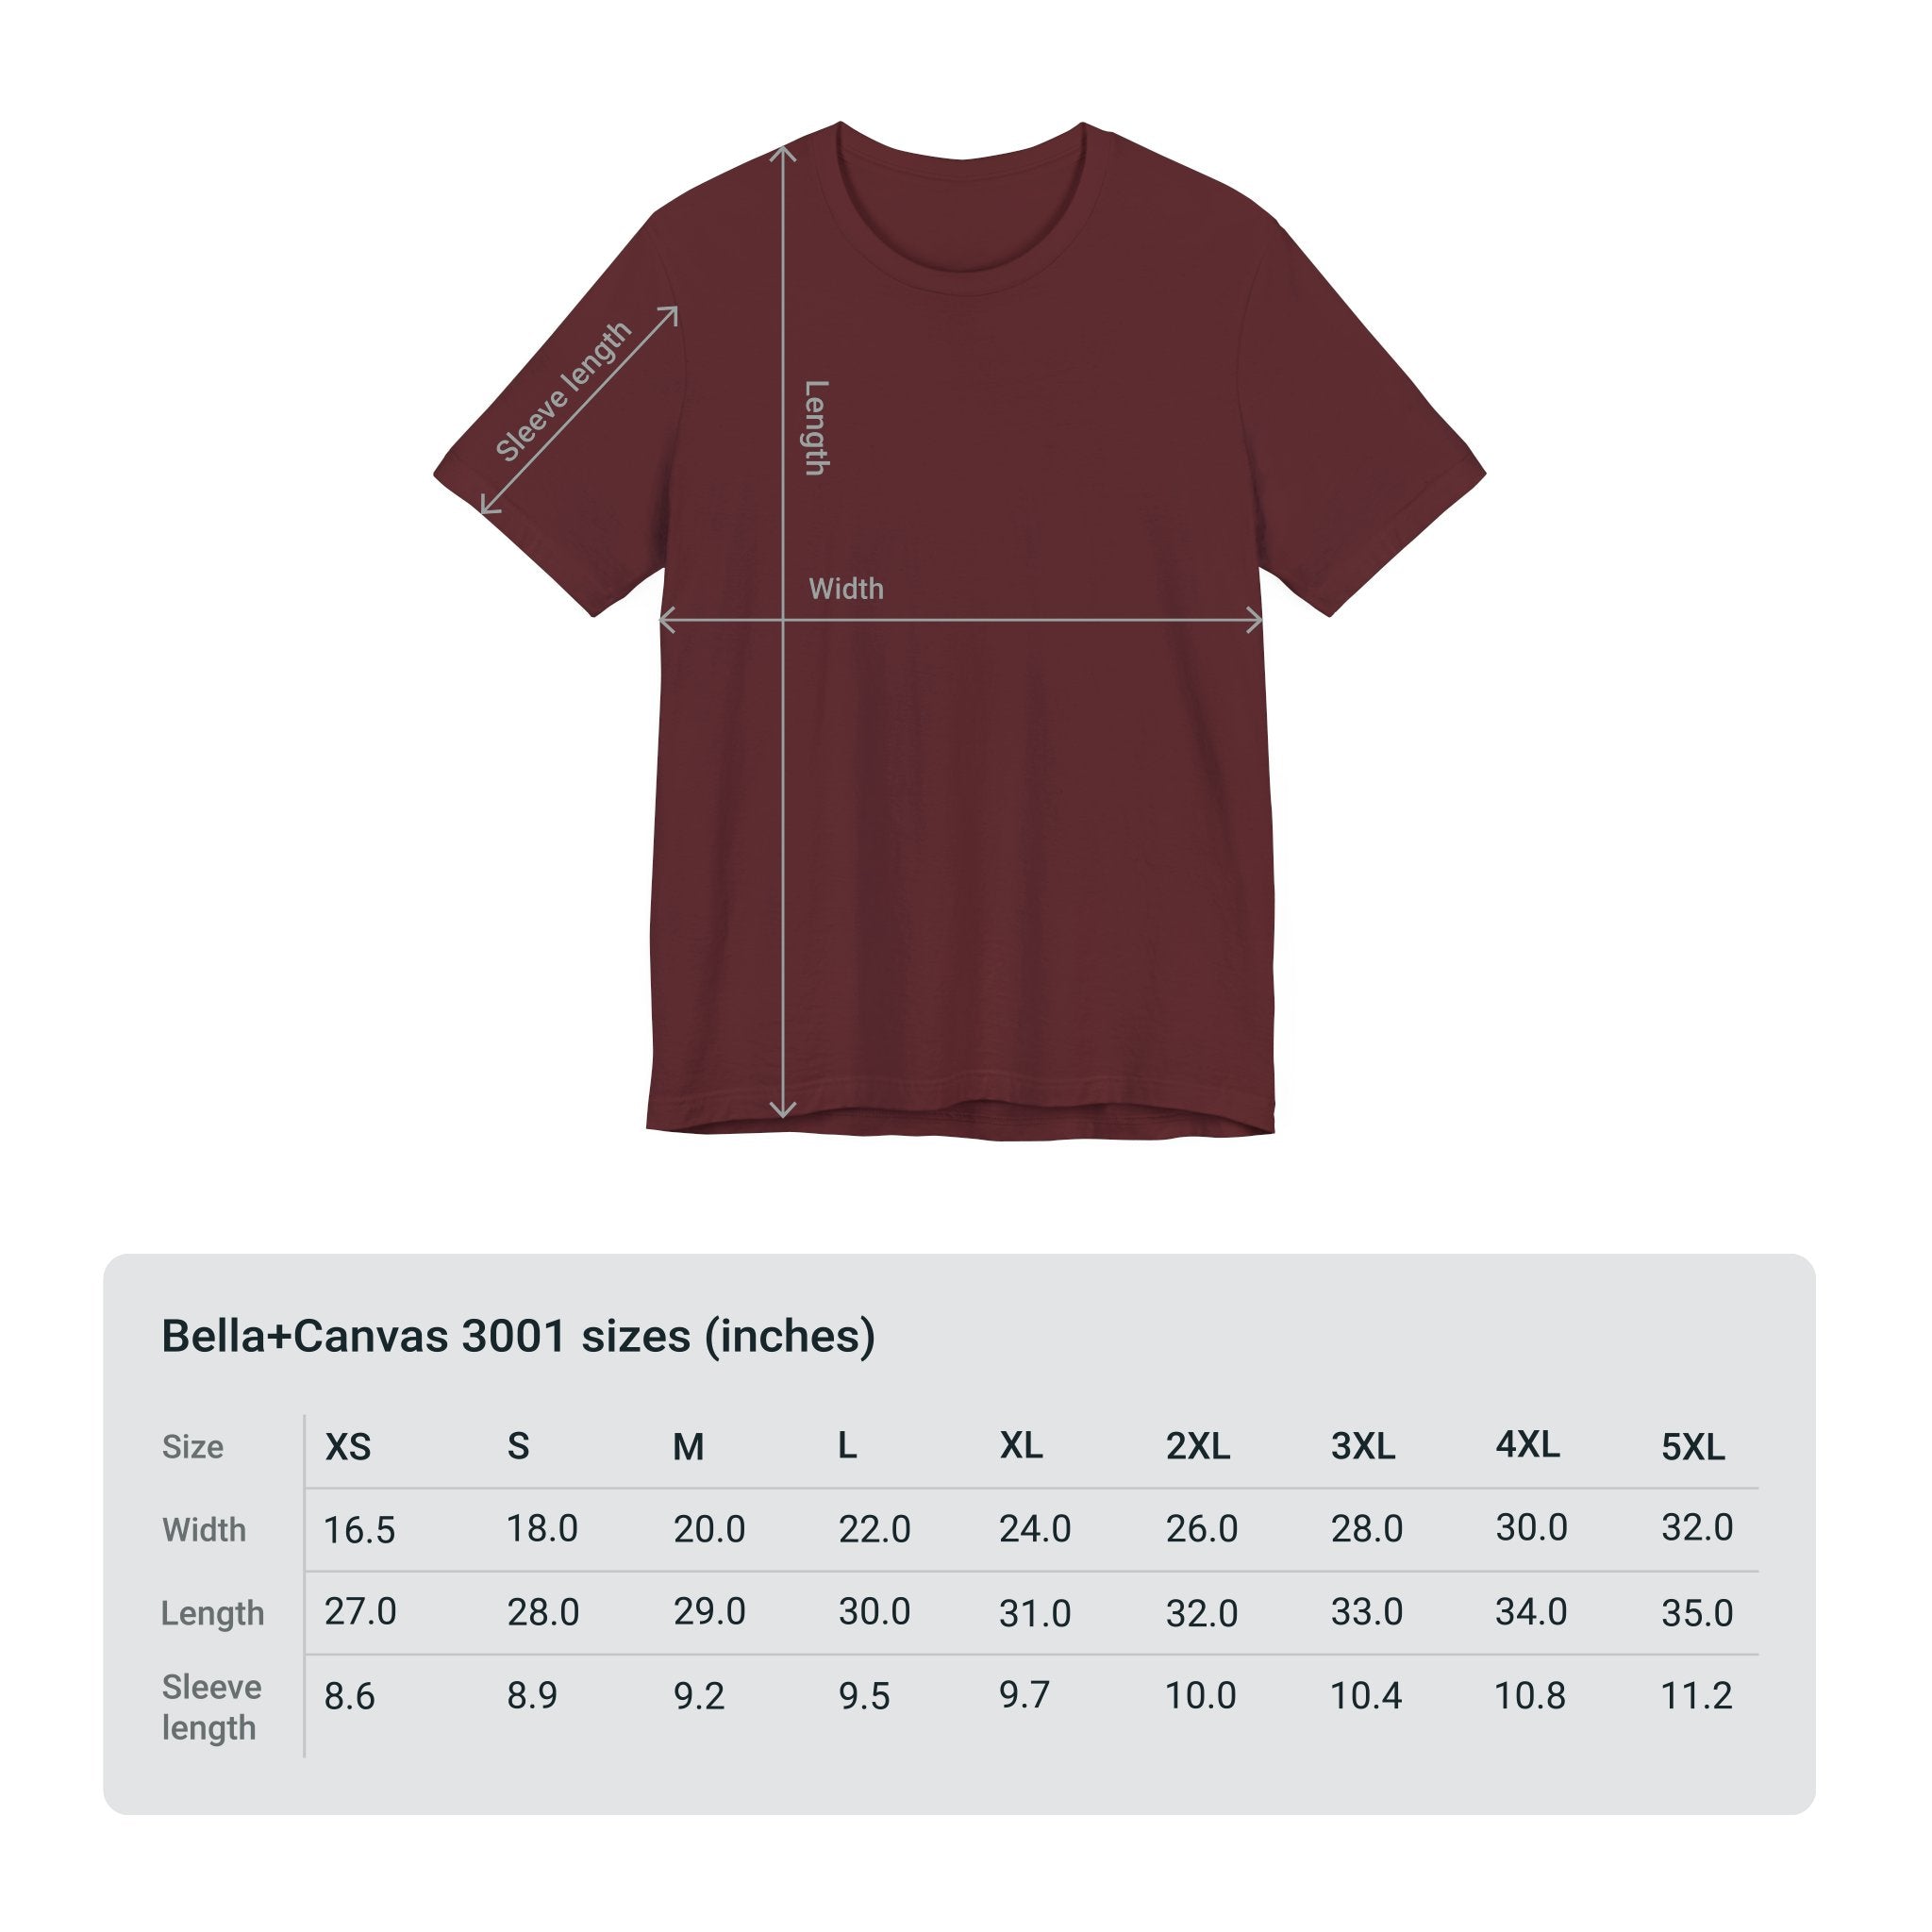 Adventure Unlimited Surfing T-Shirt size measurements displayed - Soulshinecreators - Bella & Canvas EU - Direct-to-garment printed item